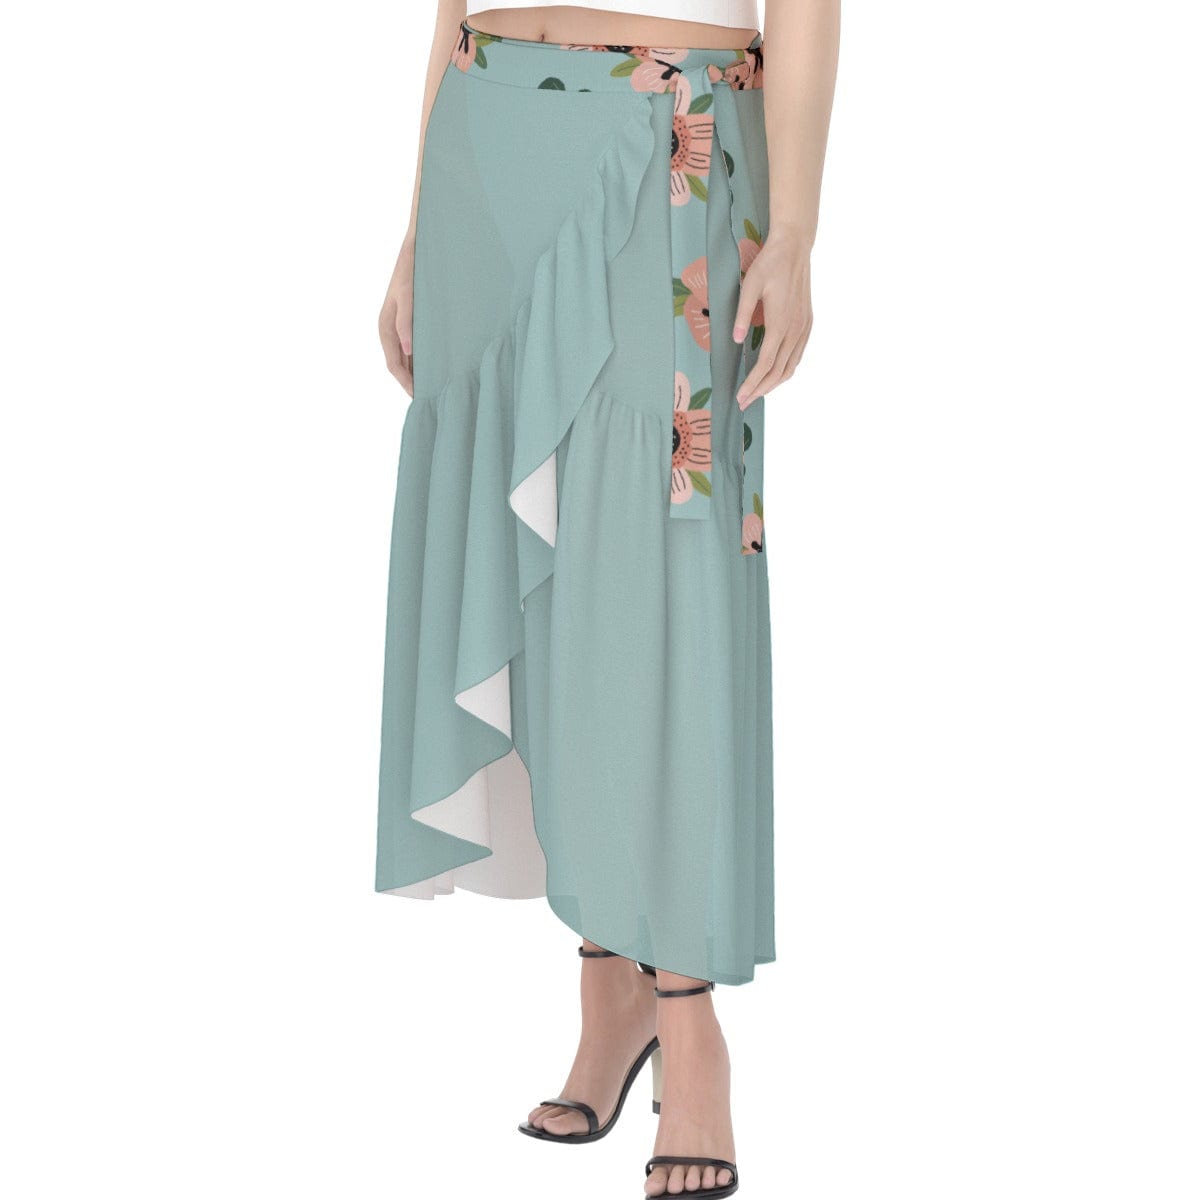 Yoycol Blue Green Coral Floral skirt -  Women's Wrap Skirt